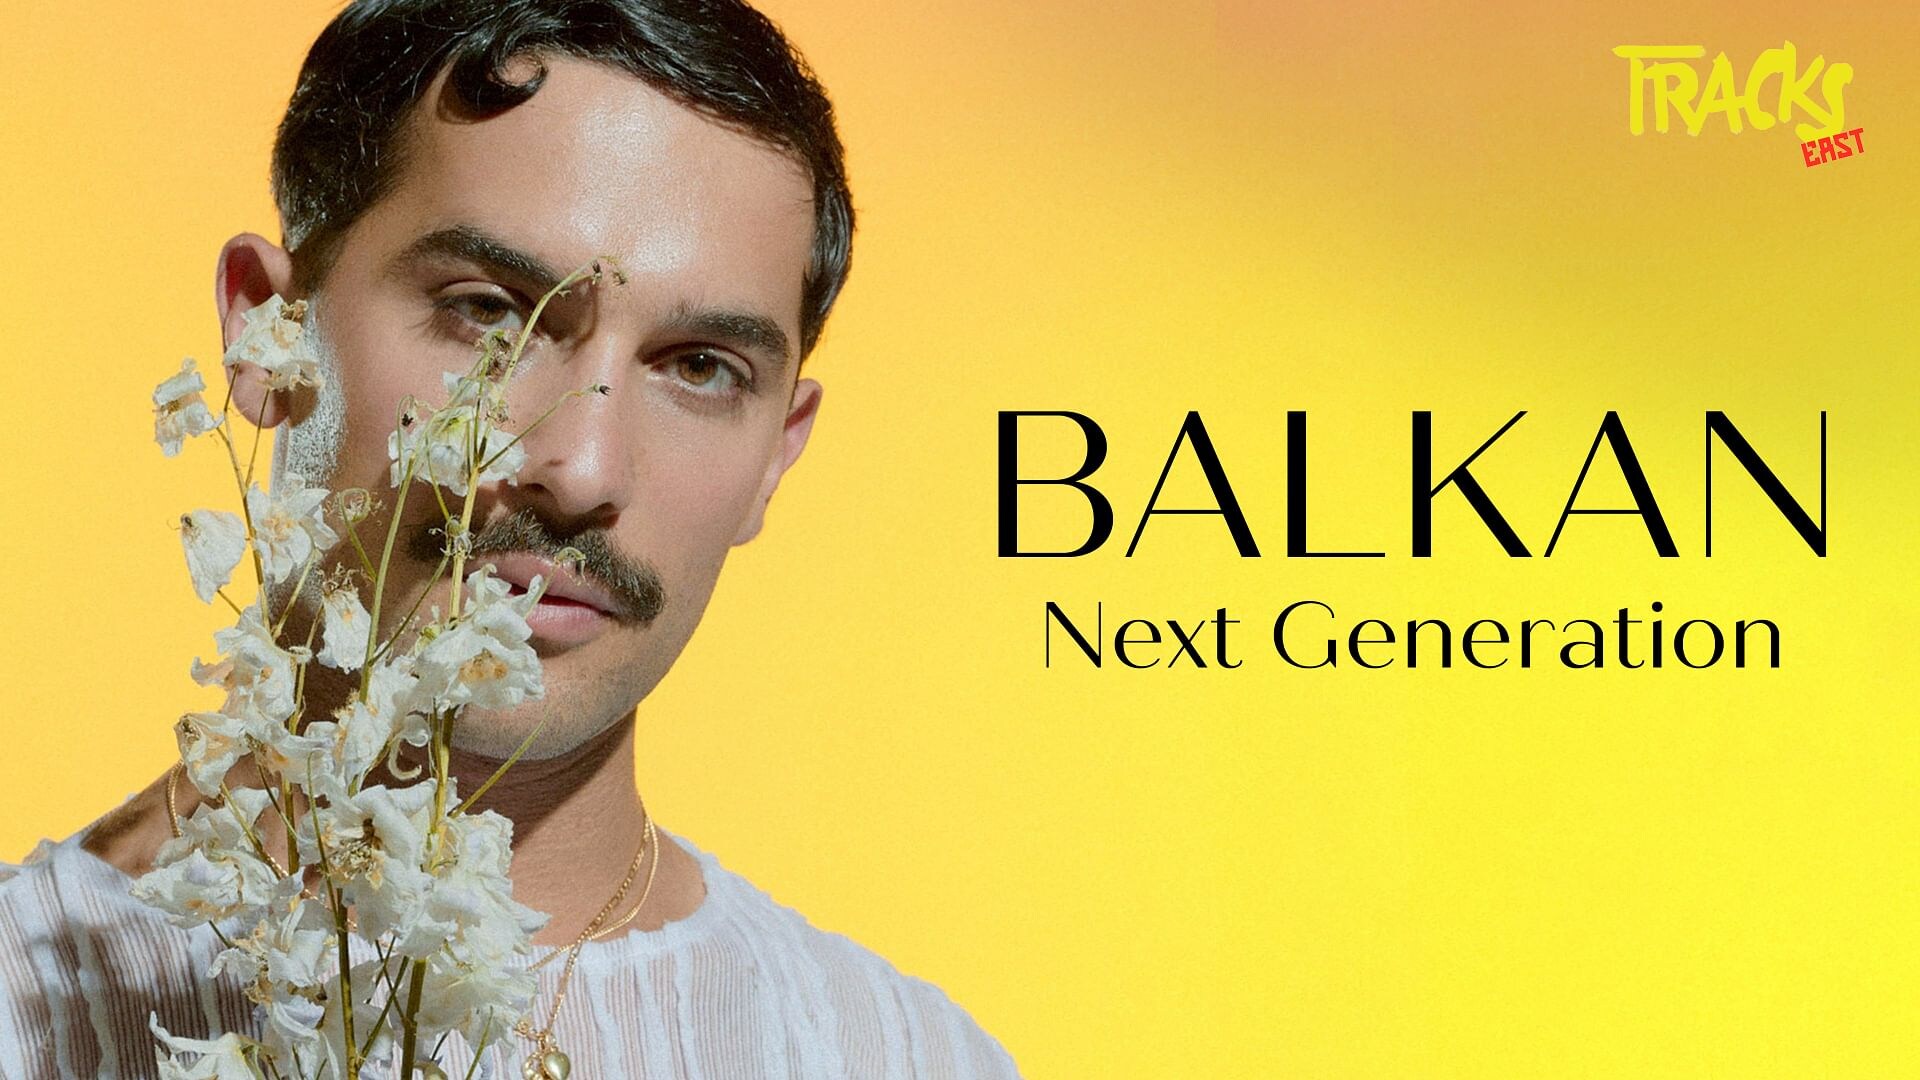 Tracks East - Balkan, Next Generation